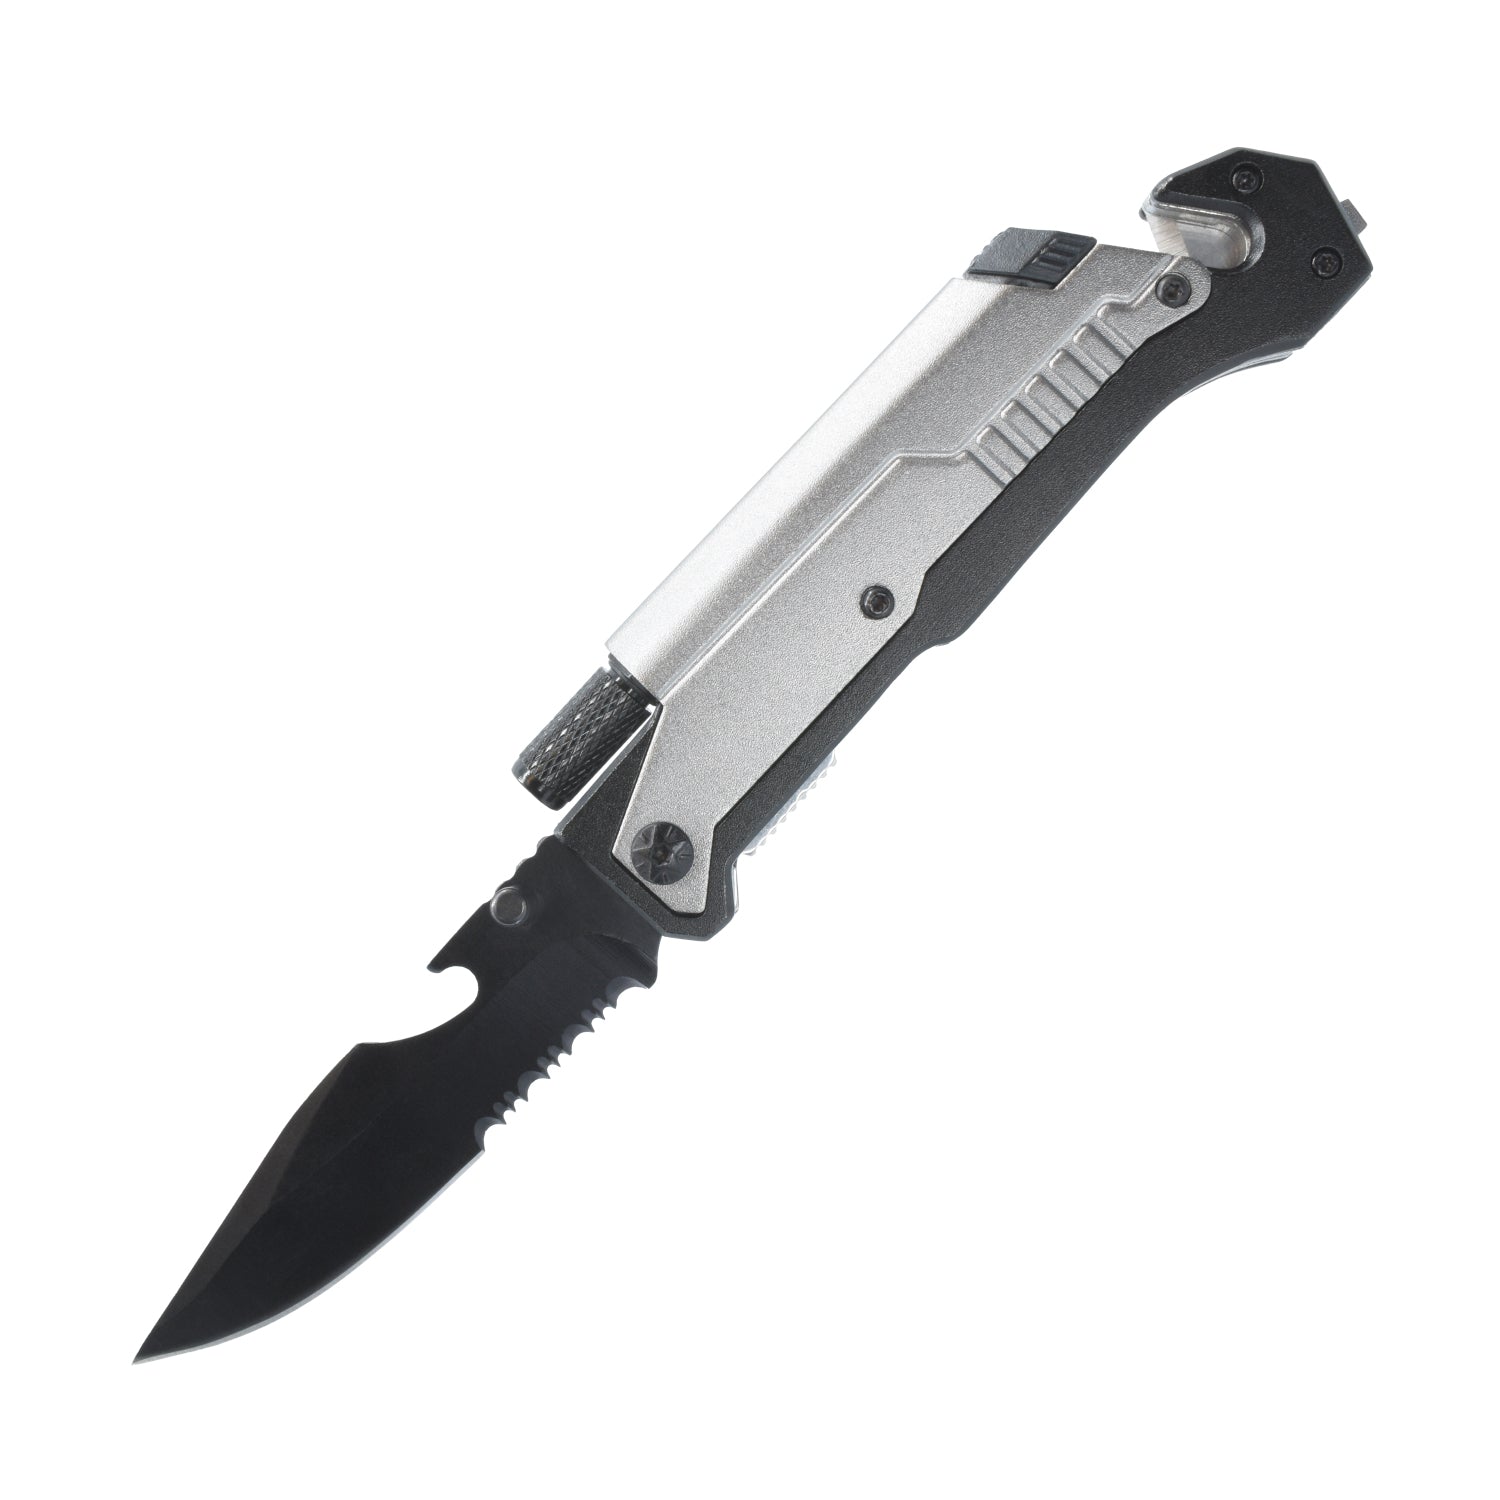 5N1 Survival Knife with LED Flashlight & Fire Starter